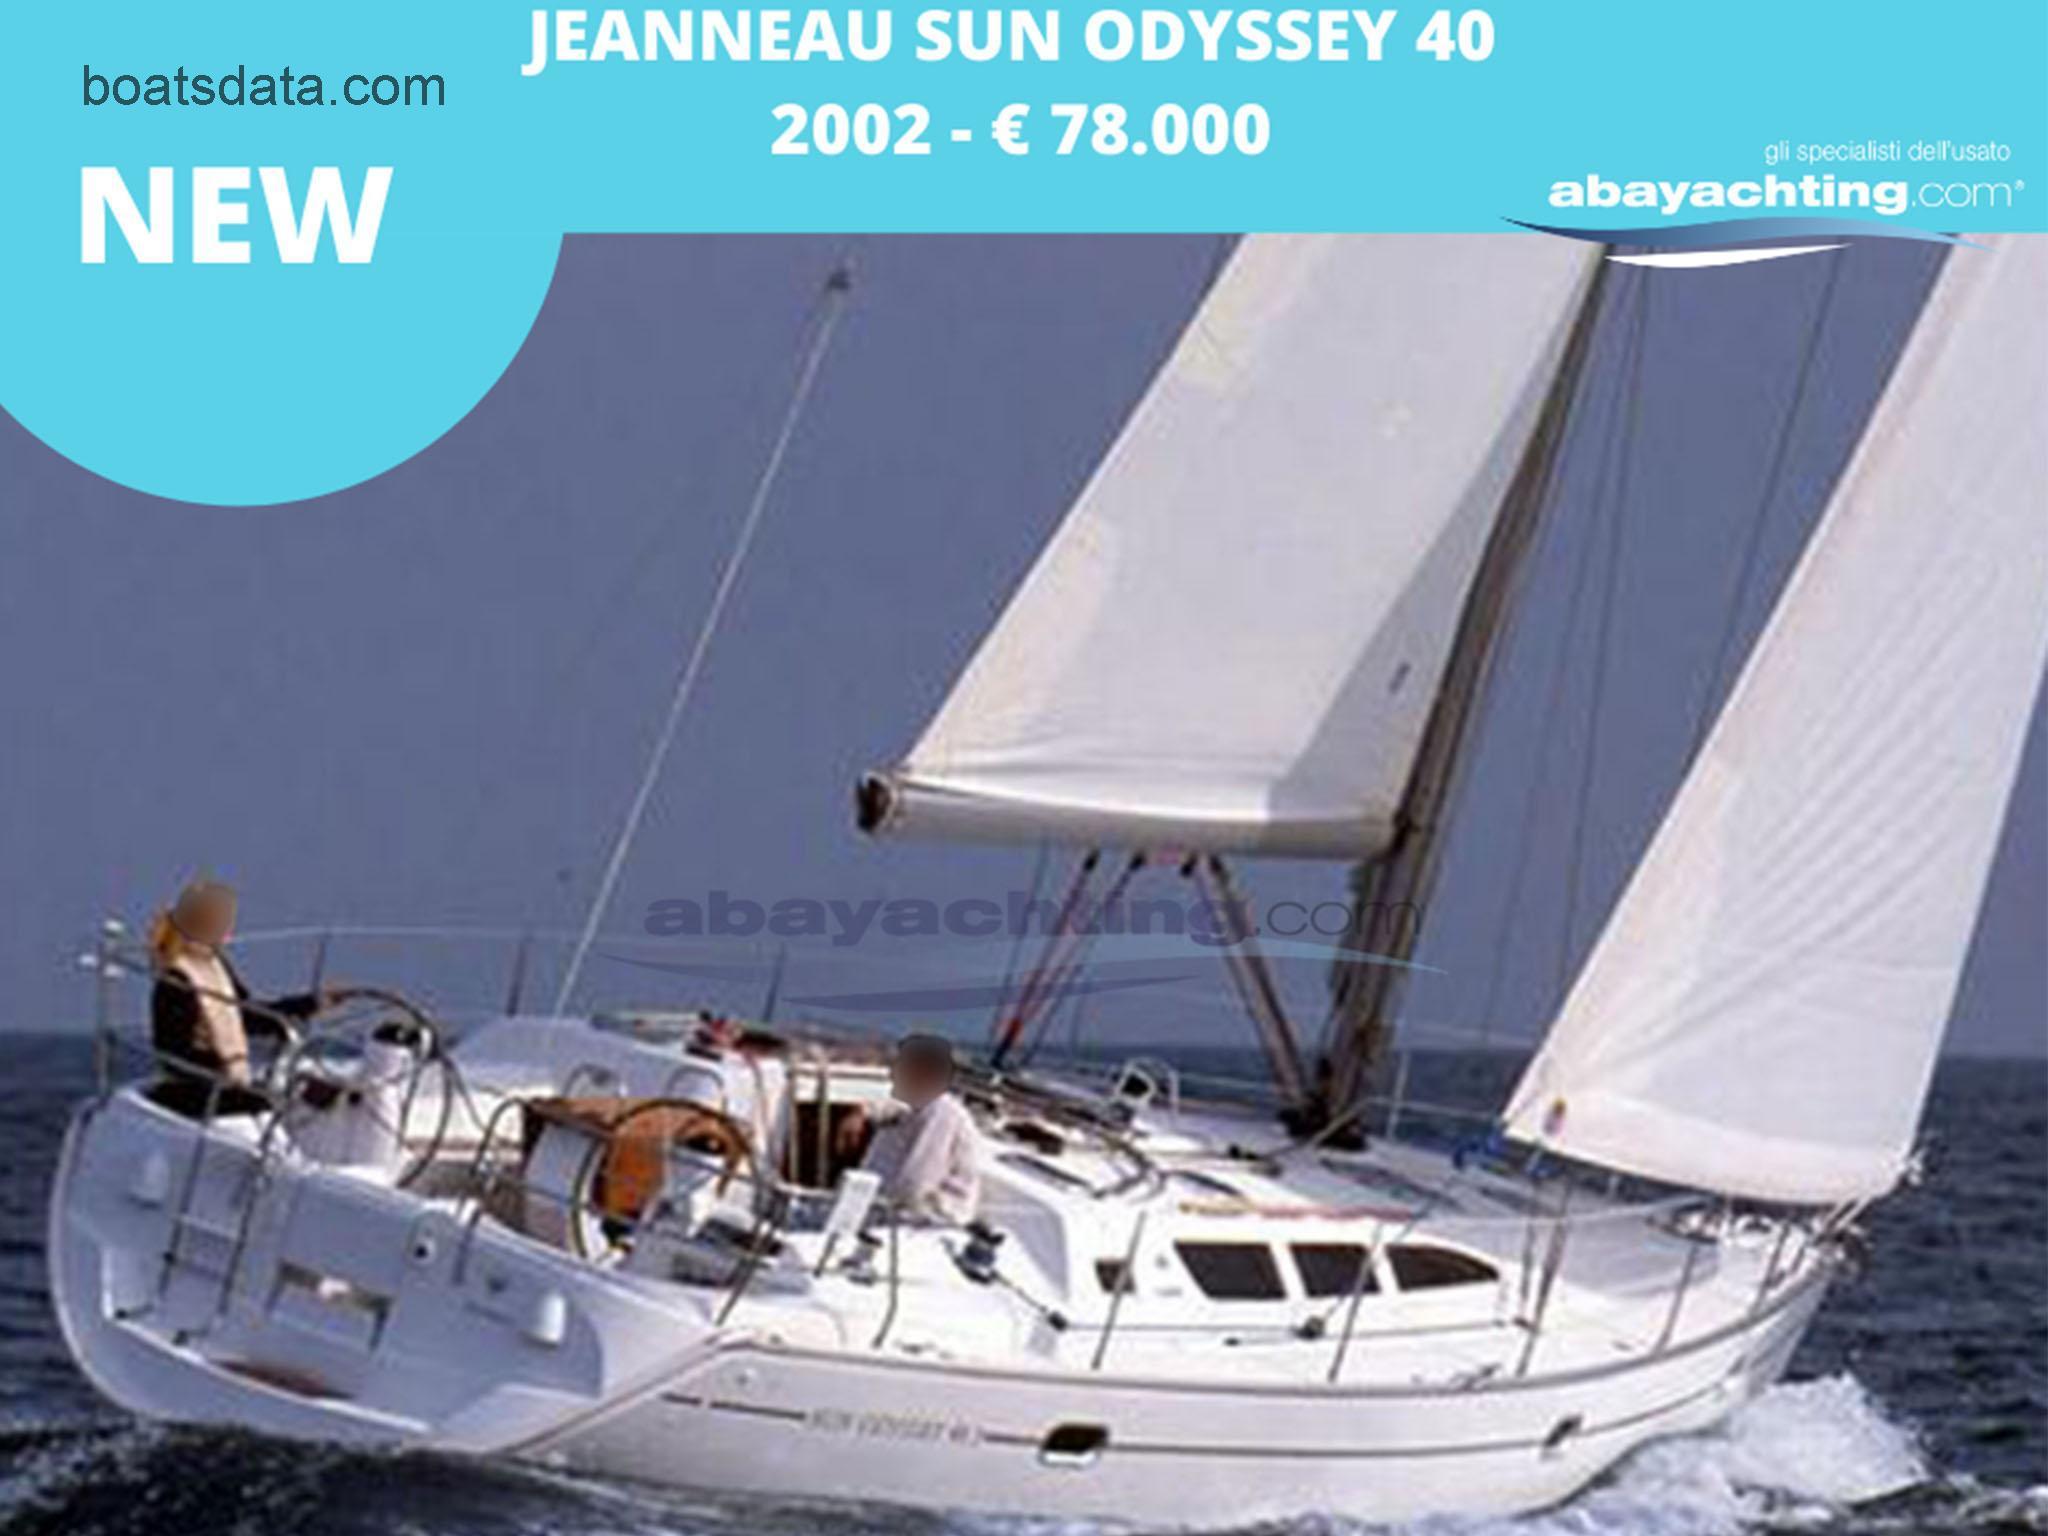 Jeanneau Sun Odyssey 40 Technical Data 